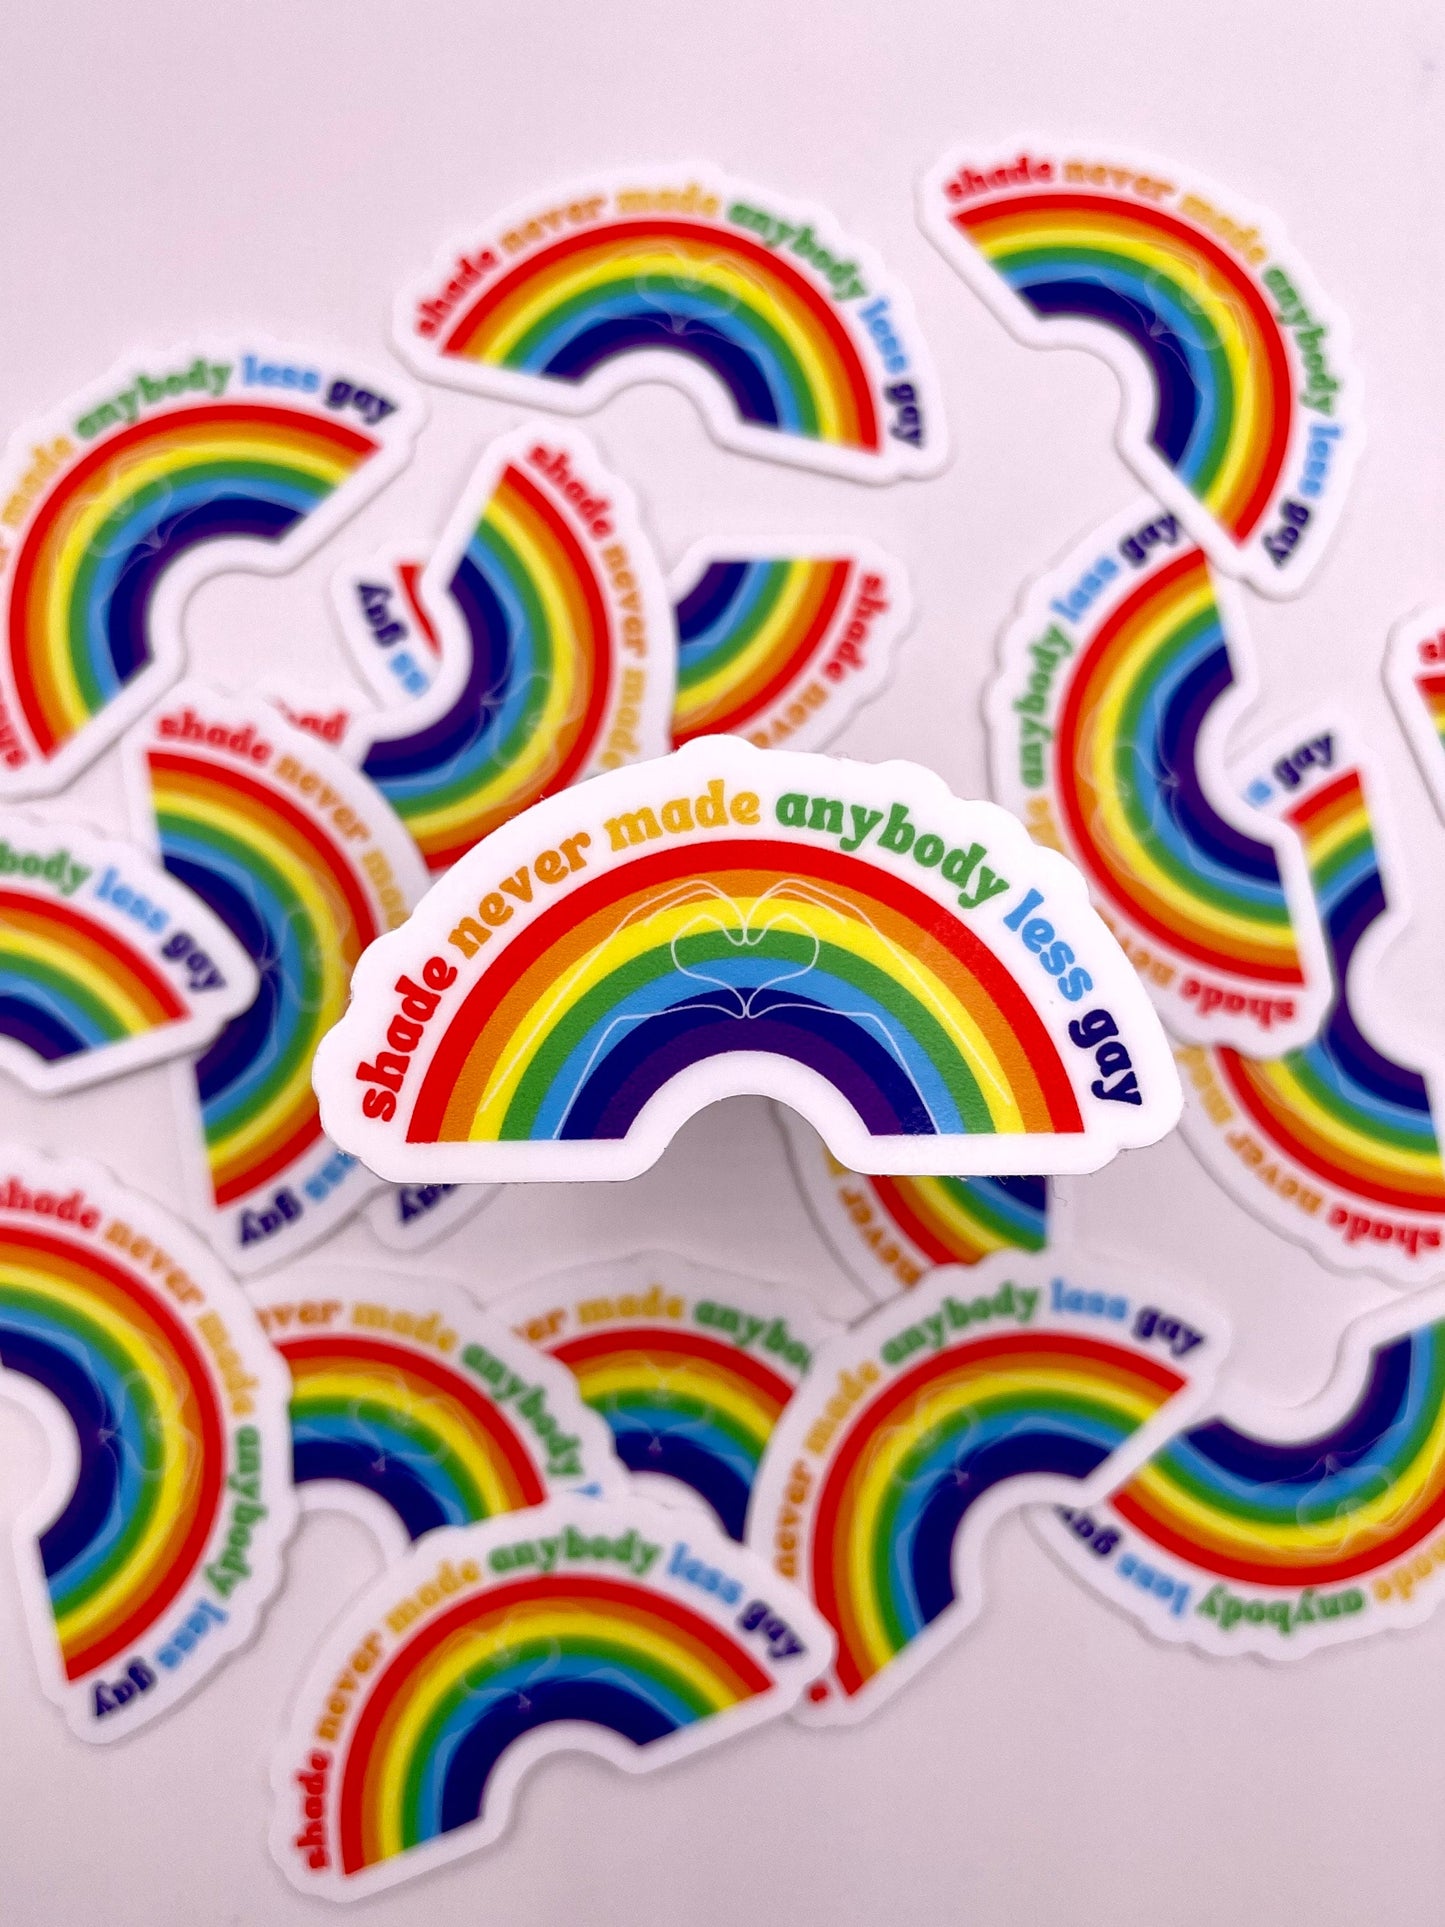 Shade Never Made Anybody Less Gay Rainbow Sticker | Taylor Swift Sticker